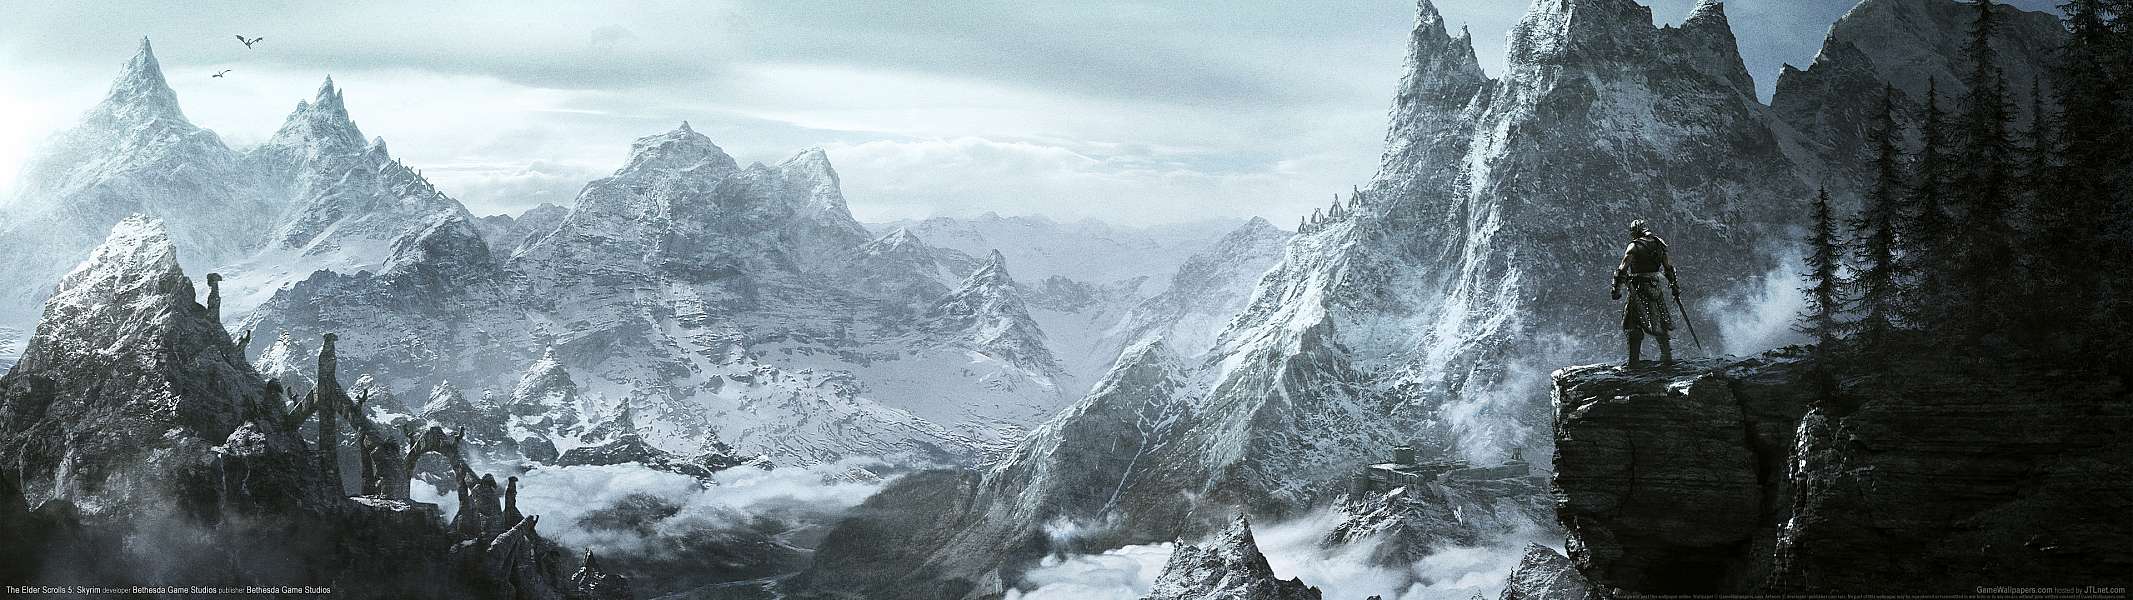 The Elder Scrolls 5: Skyrim dual screen wallpaper or background